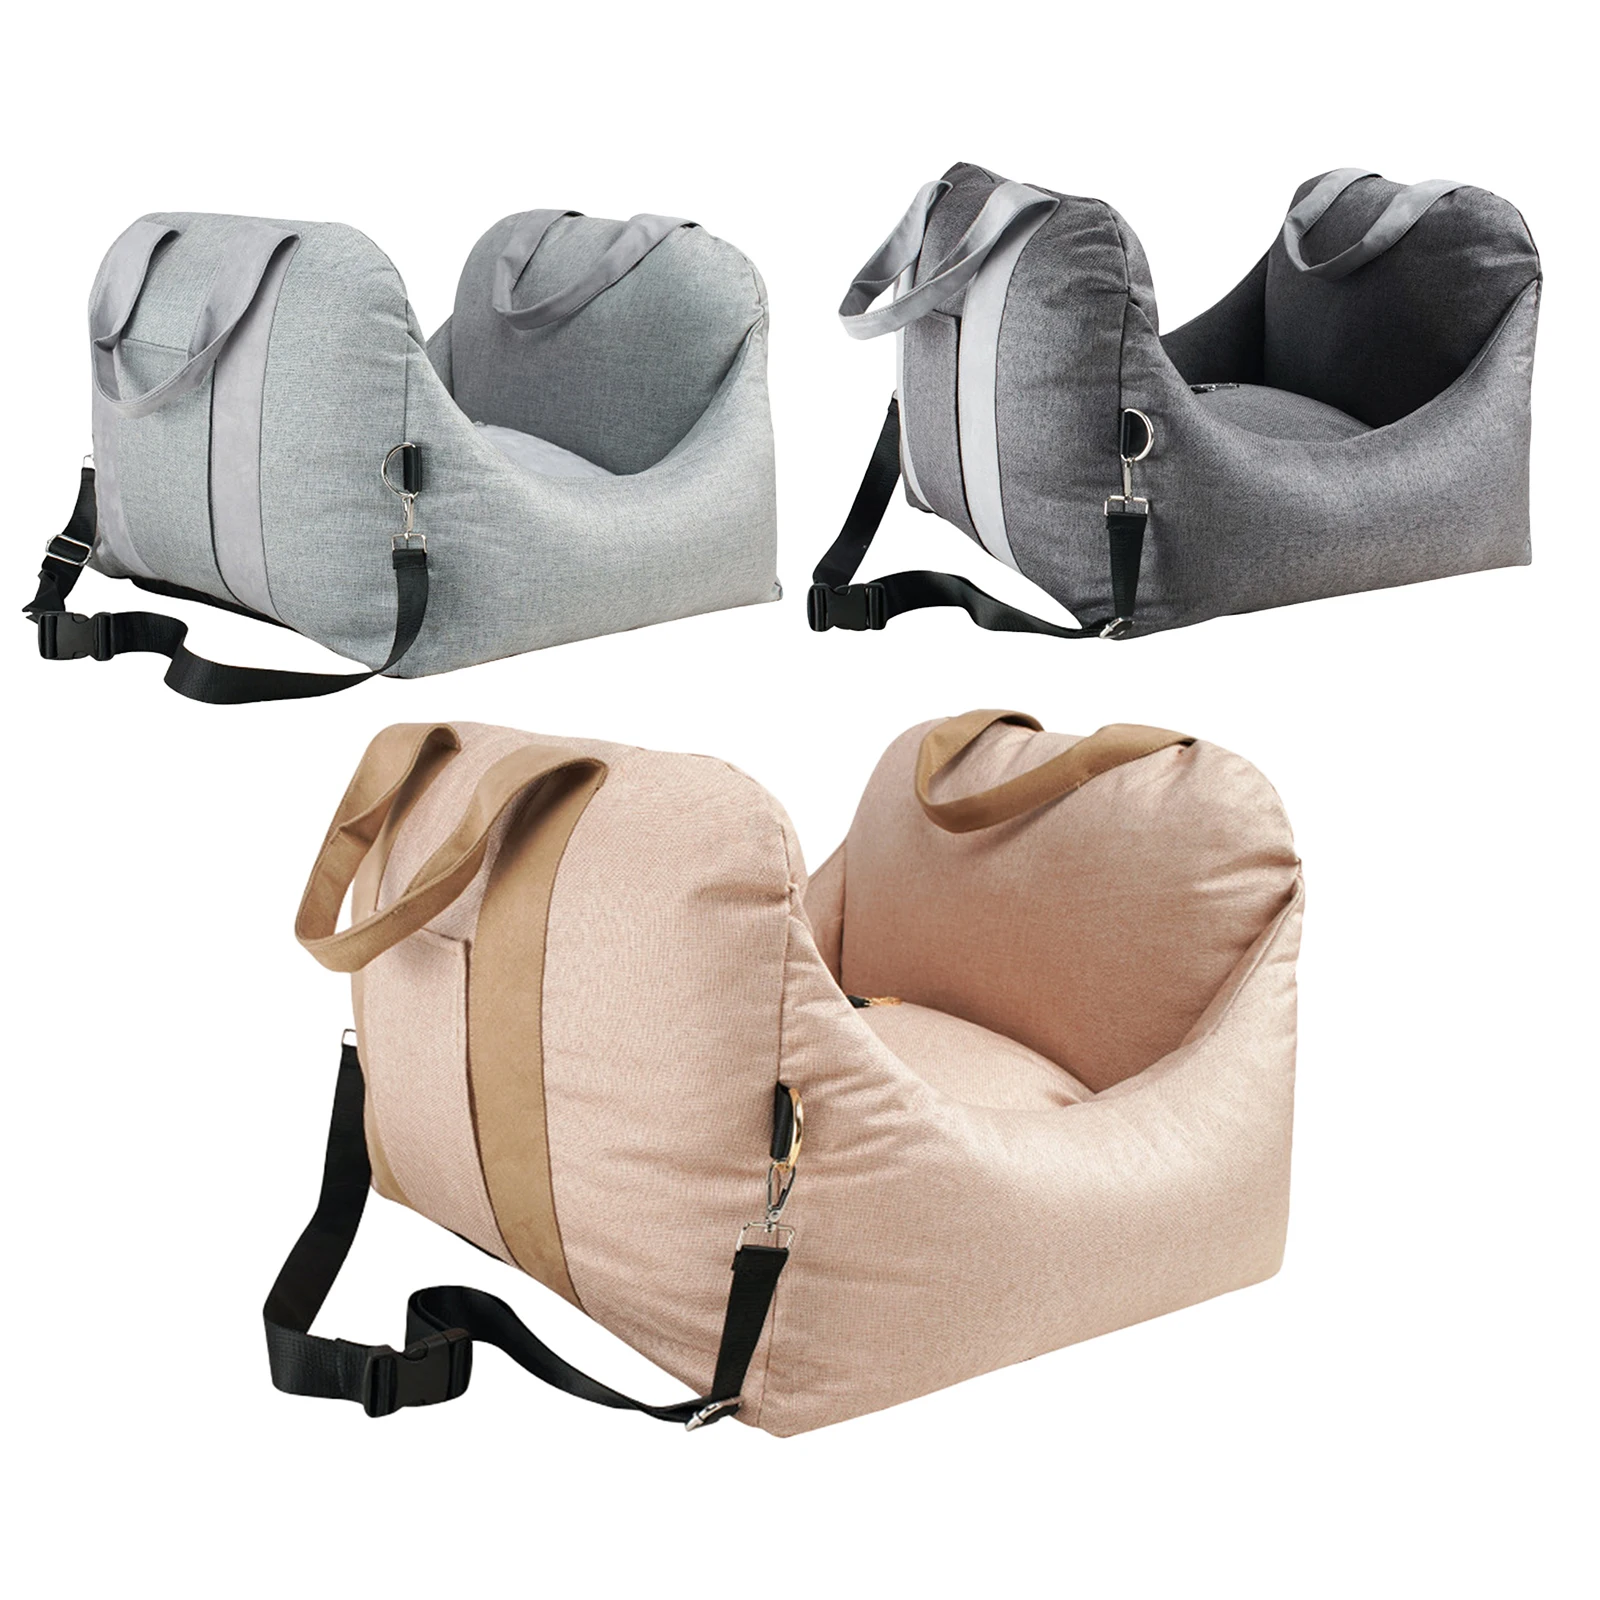 Pet Seat Safety Basket with Storage Pocket Dog Car Seat Bag for Travel Gift Car Cats